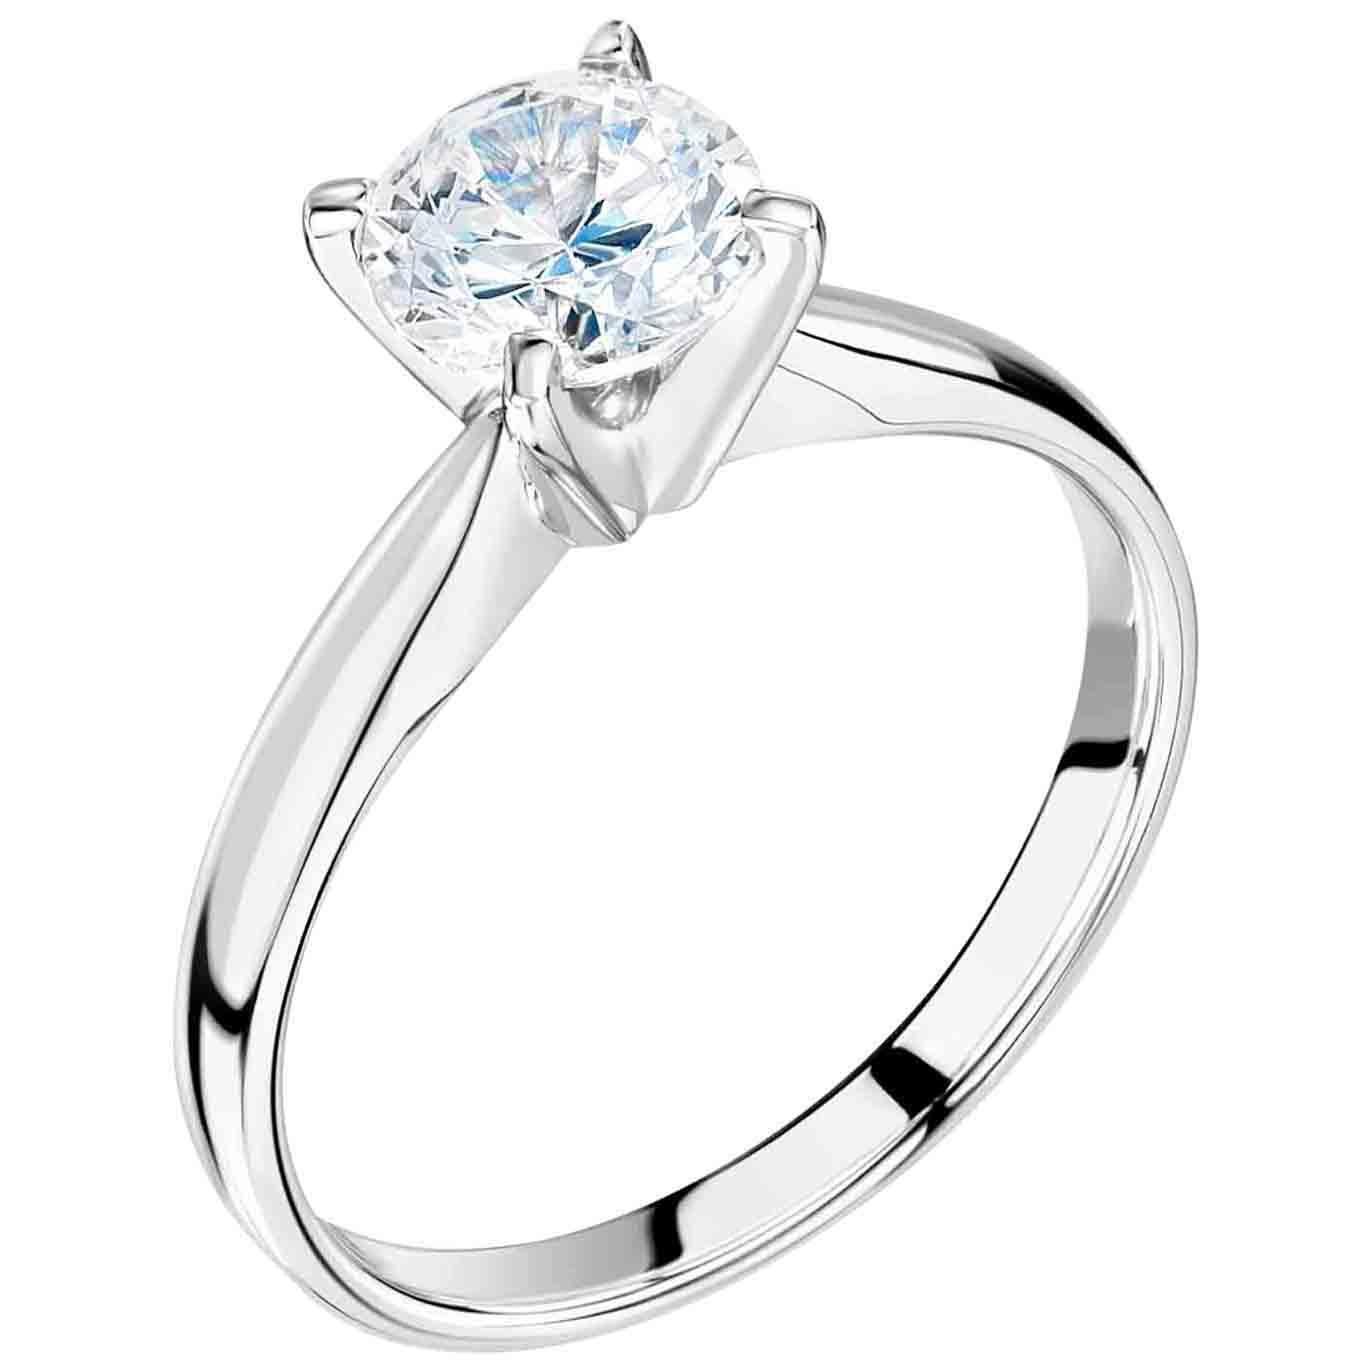 1 carat diamond wedding ring